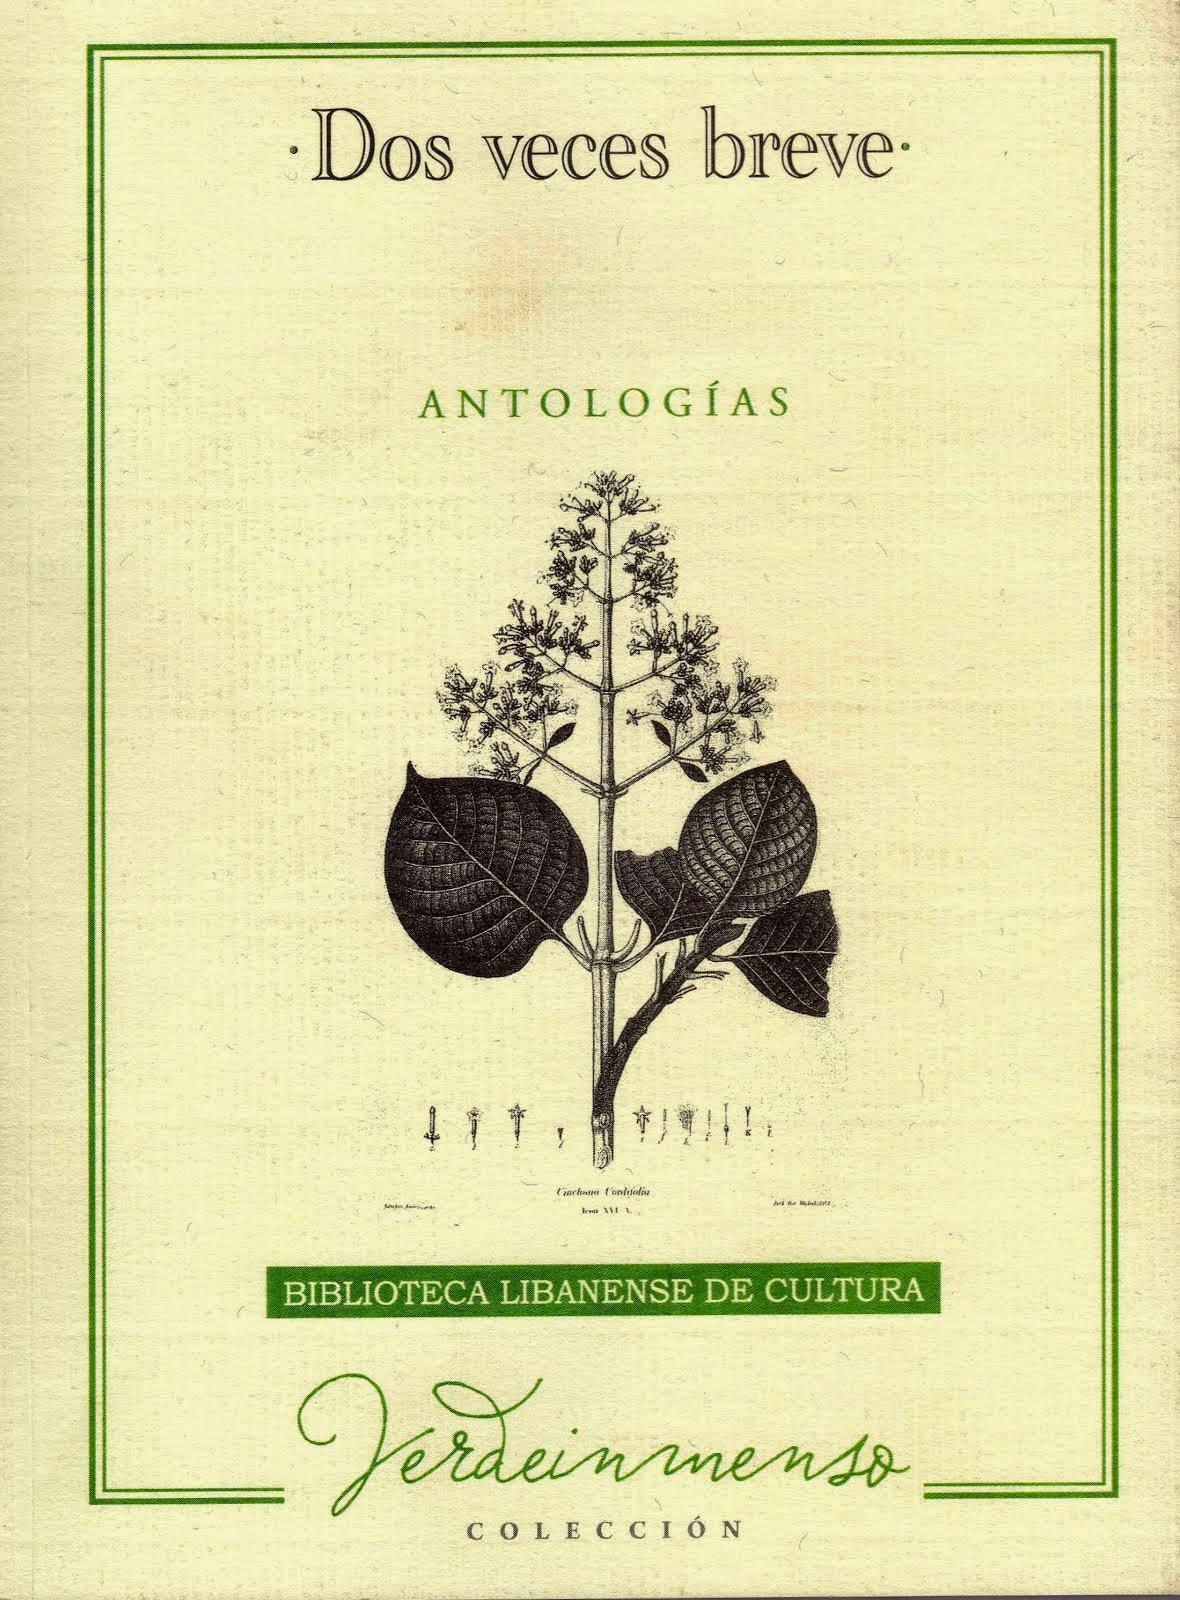 Dos veces breve. Antología Colombo-Mexiccana de Minicuento. Biblioteca Libanense de Cultura, 2013